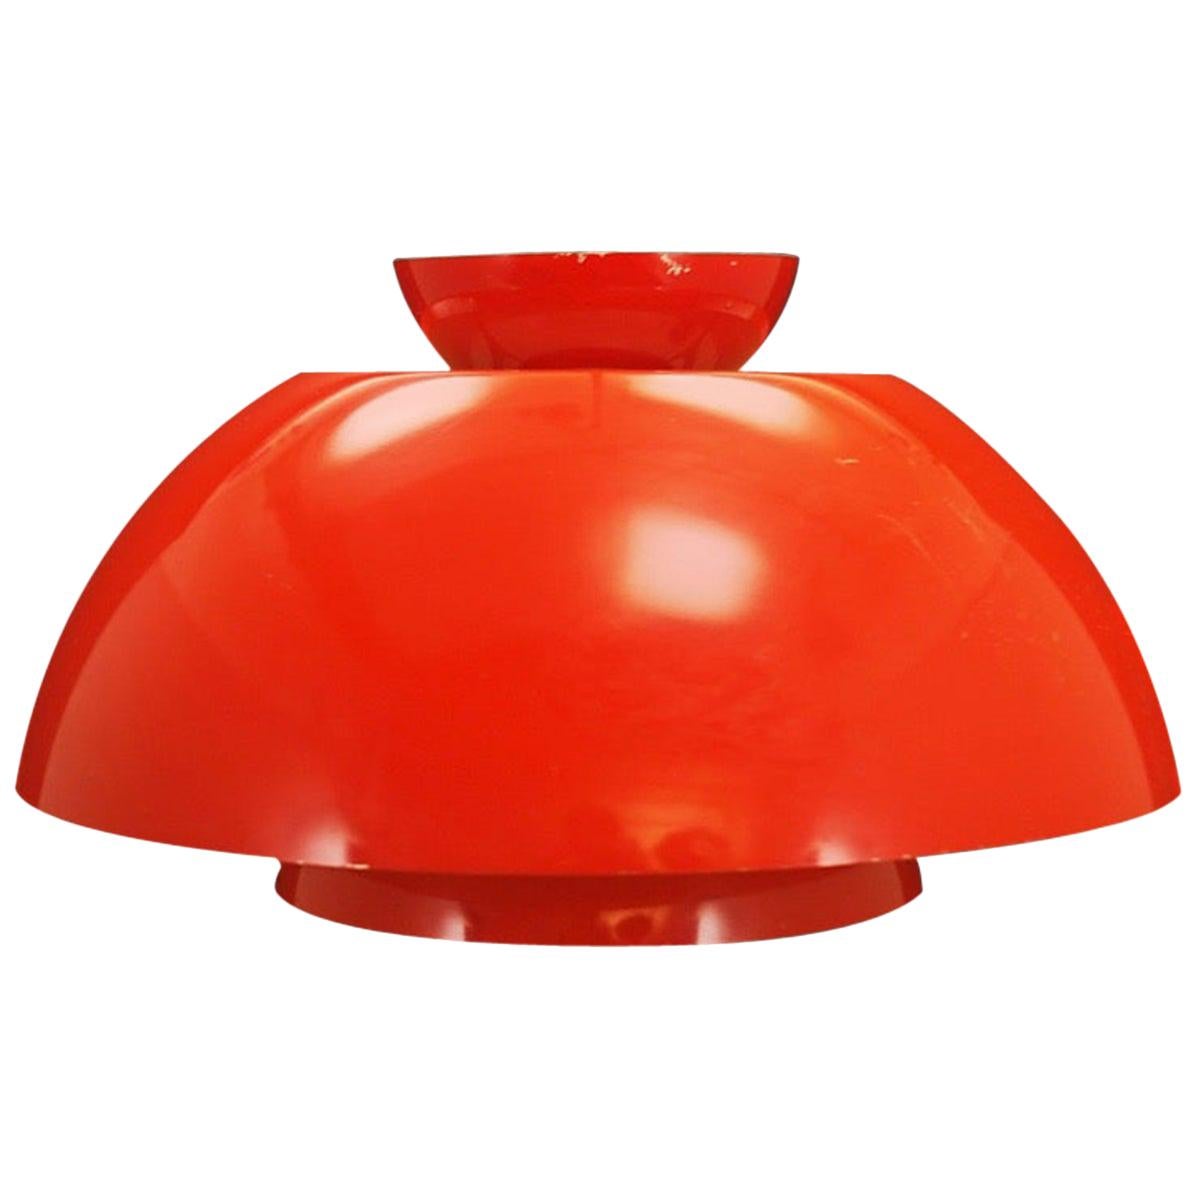 Retro Red Steel Lamp 1970s Vintage Danish Design For Sale